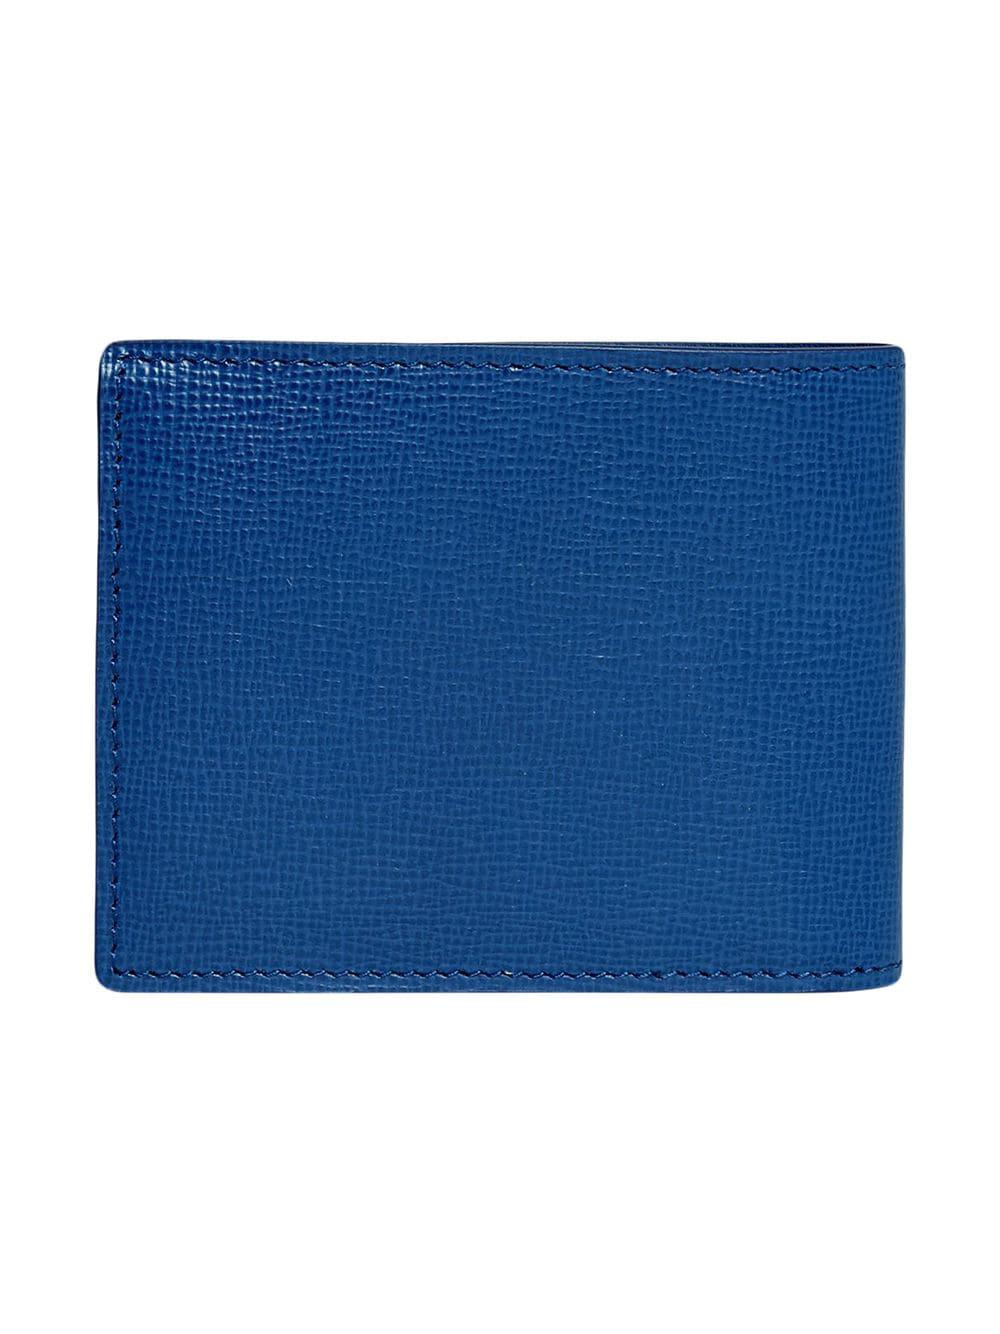 Burberry Men's Blue Wallets